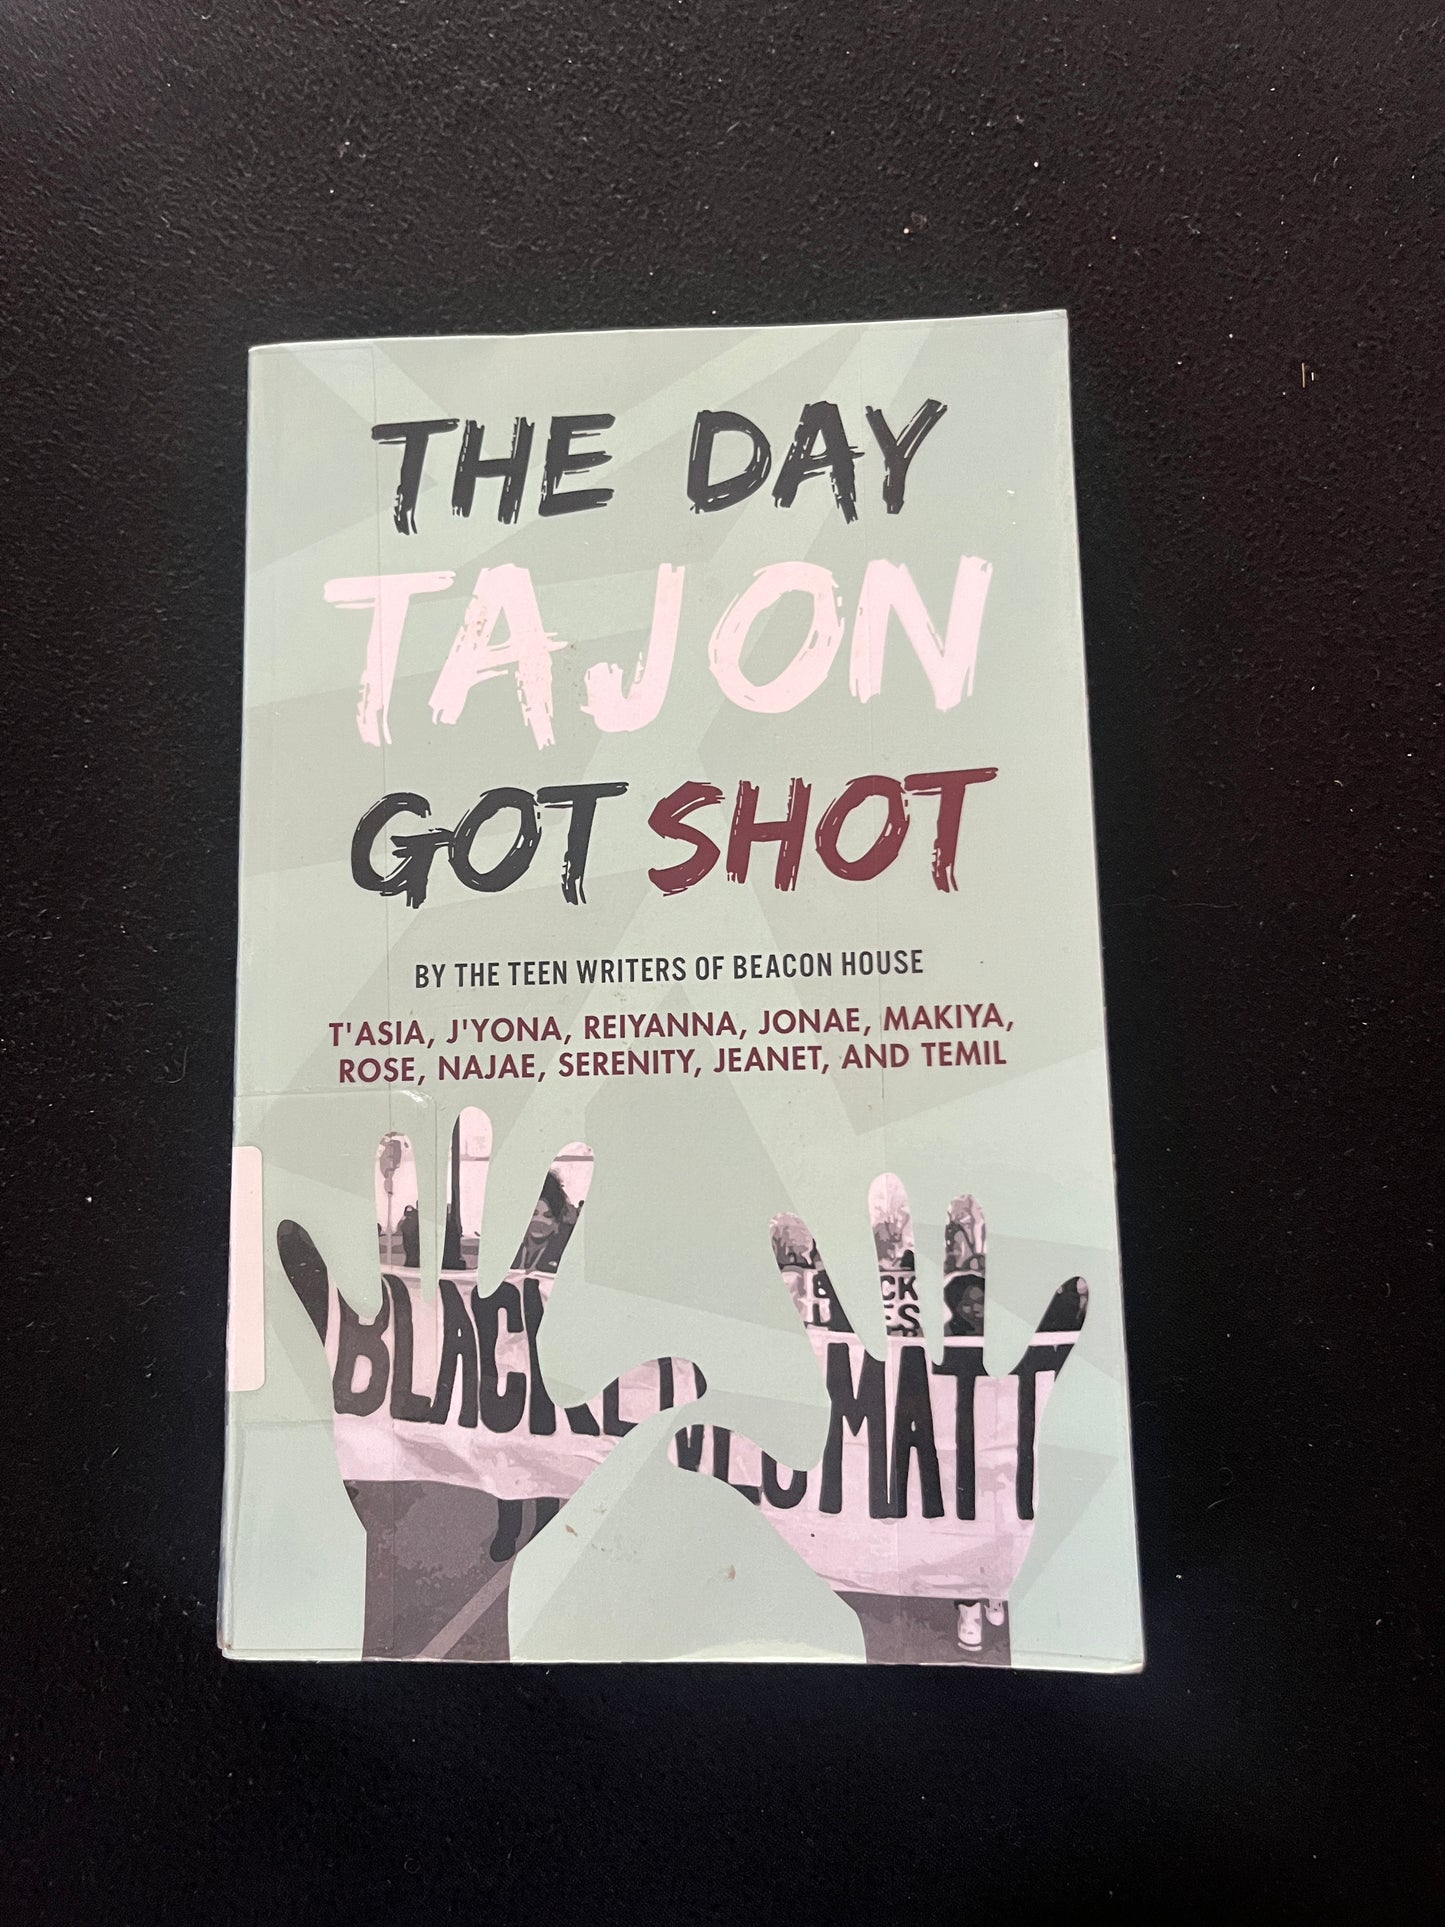 THE DAY TAJON GOT SHOT by Beacon House Writers